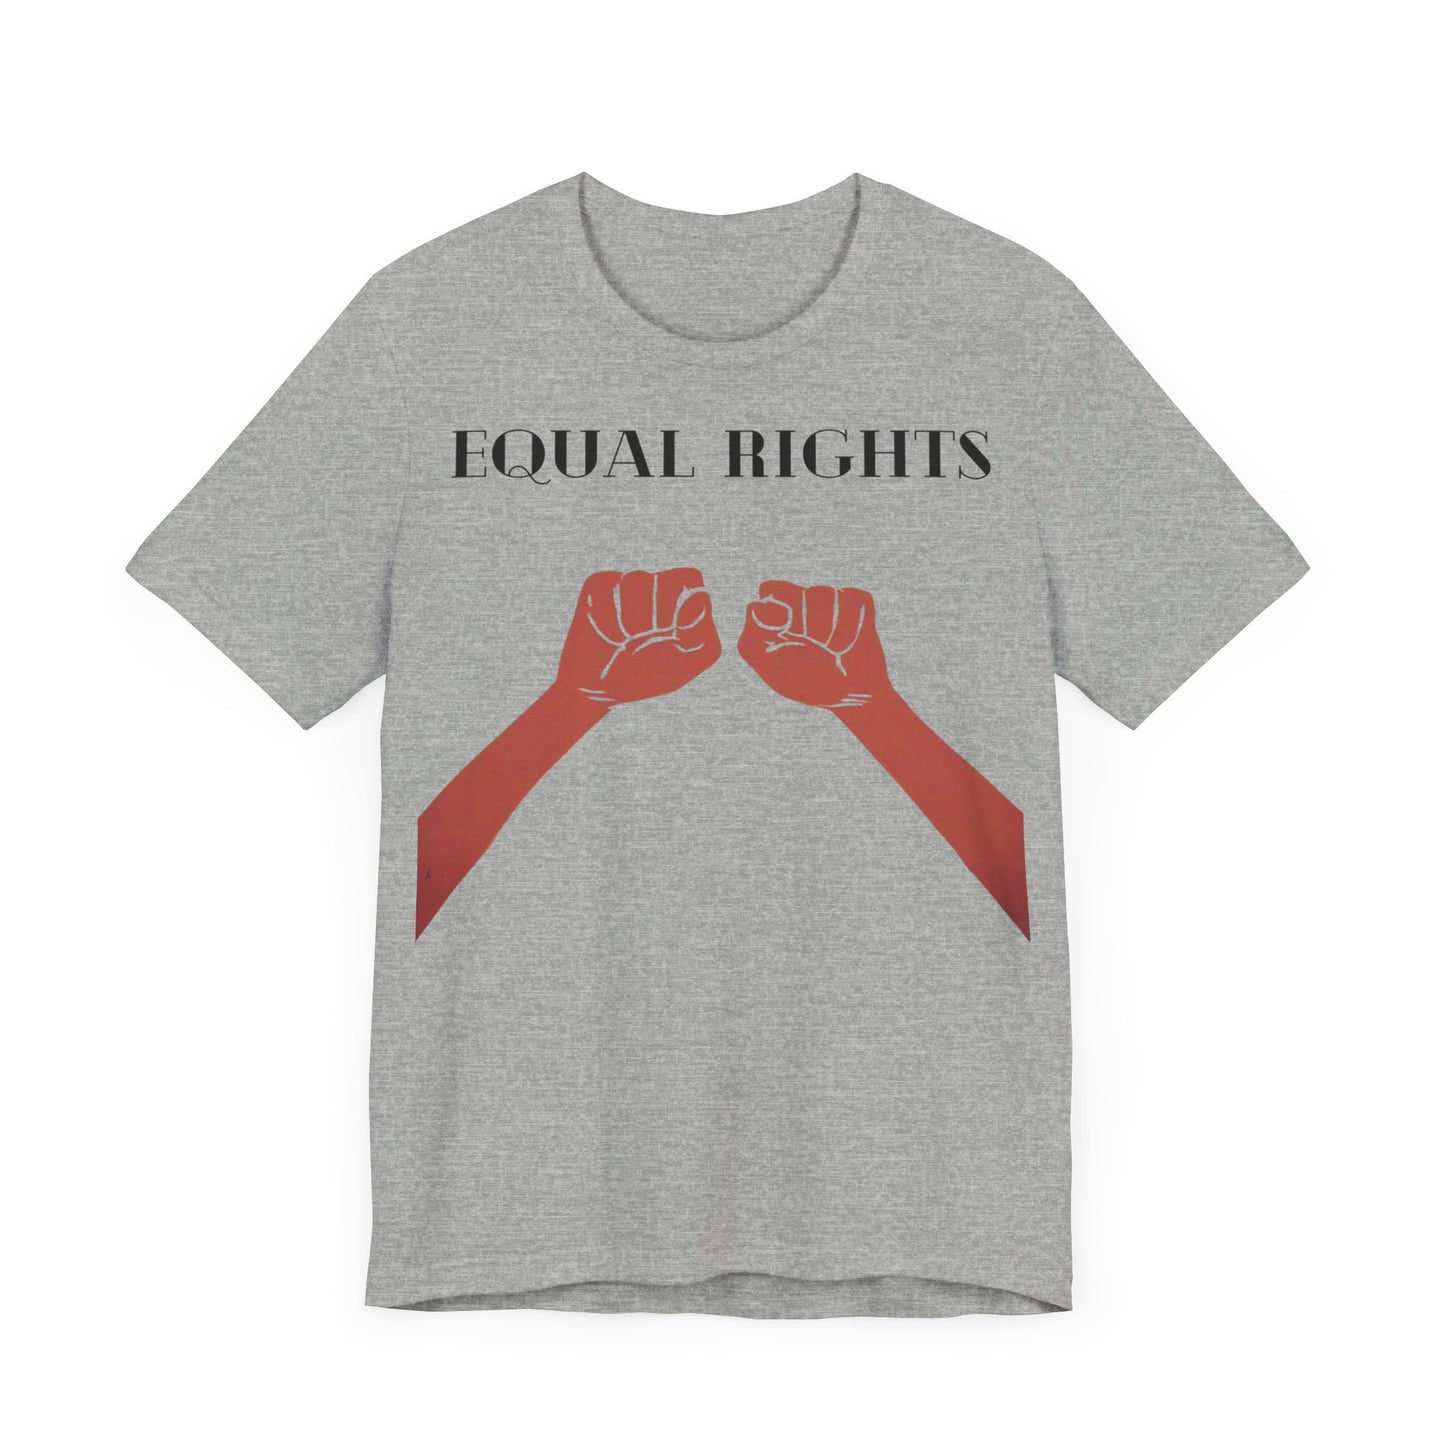 Stil trifft Statement, Unisex Equal Rights T-Shirt, Unisex Herren T-Shirt, T- Shirt fur Damen, Manner T-Shirt, Aufdruck Equal Rights, Fabric